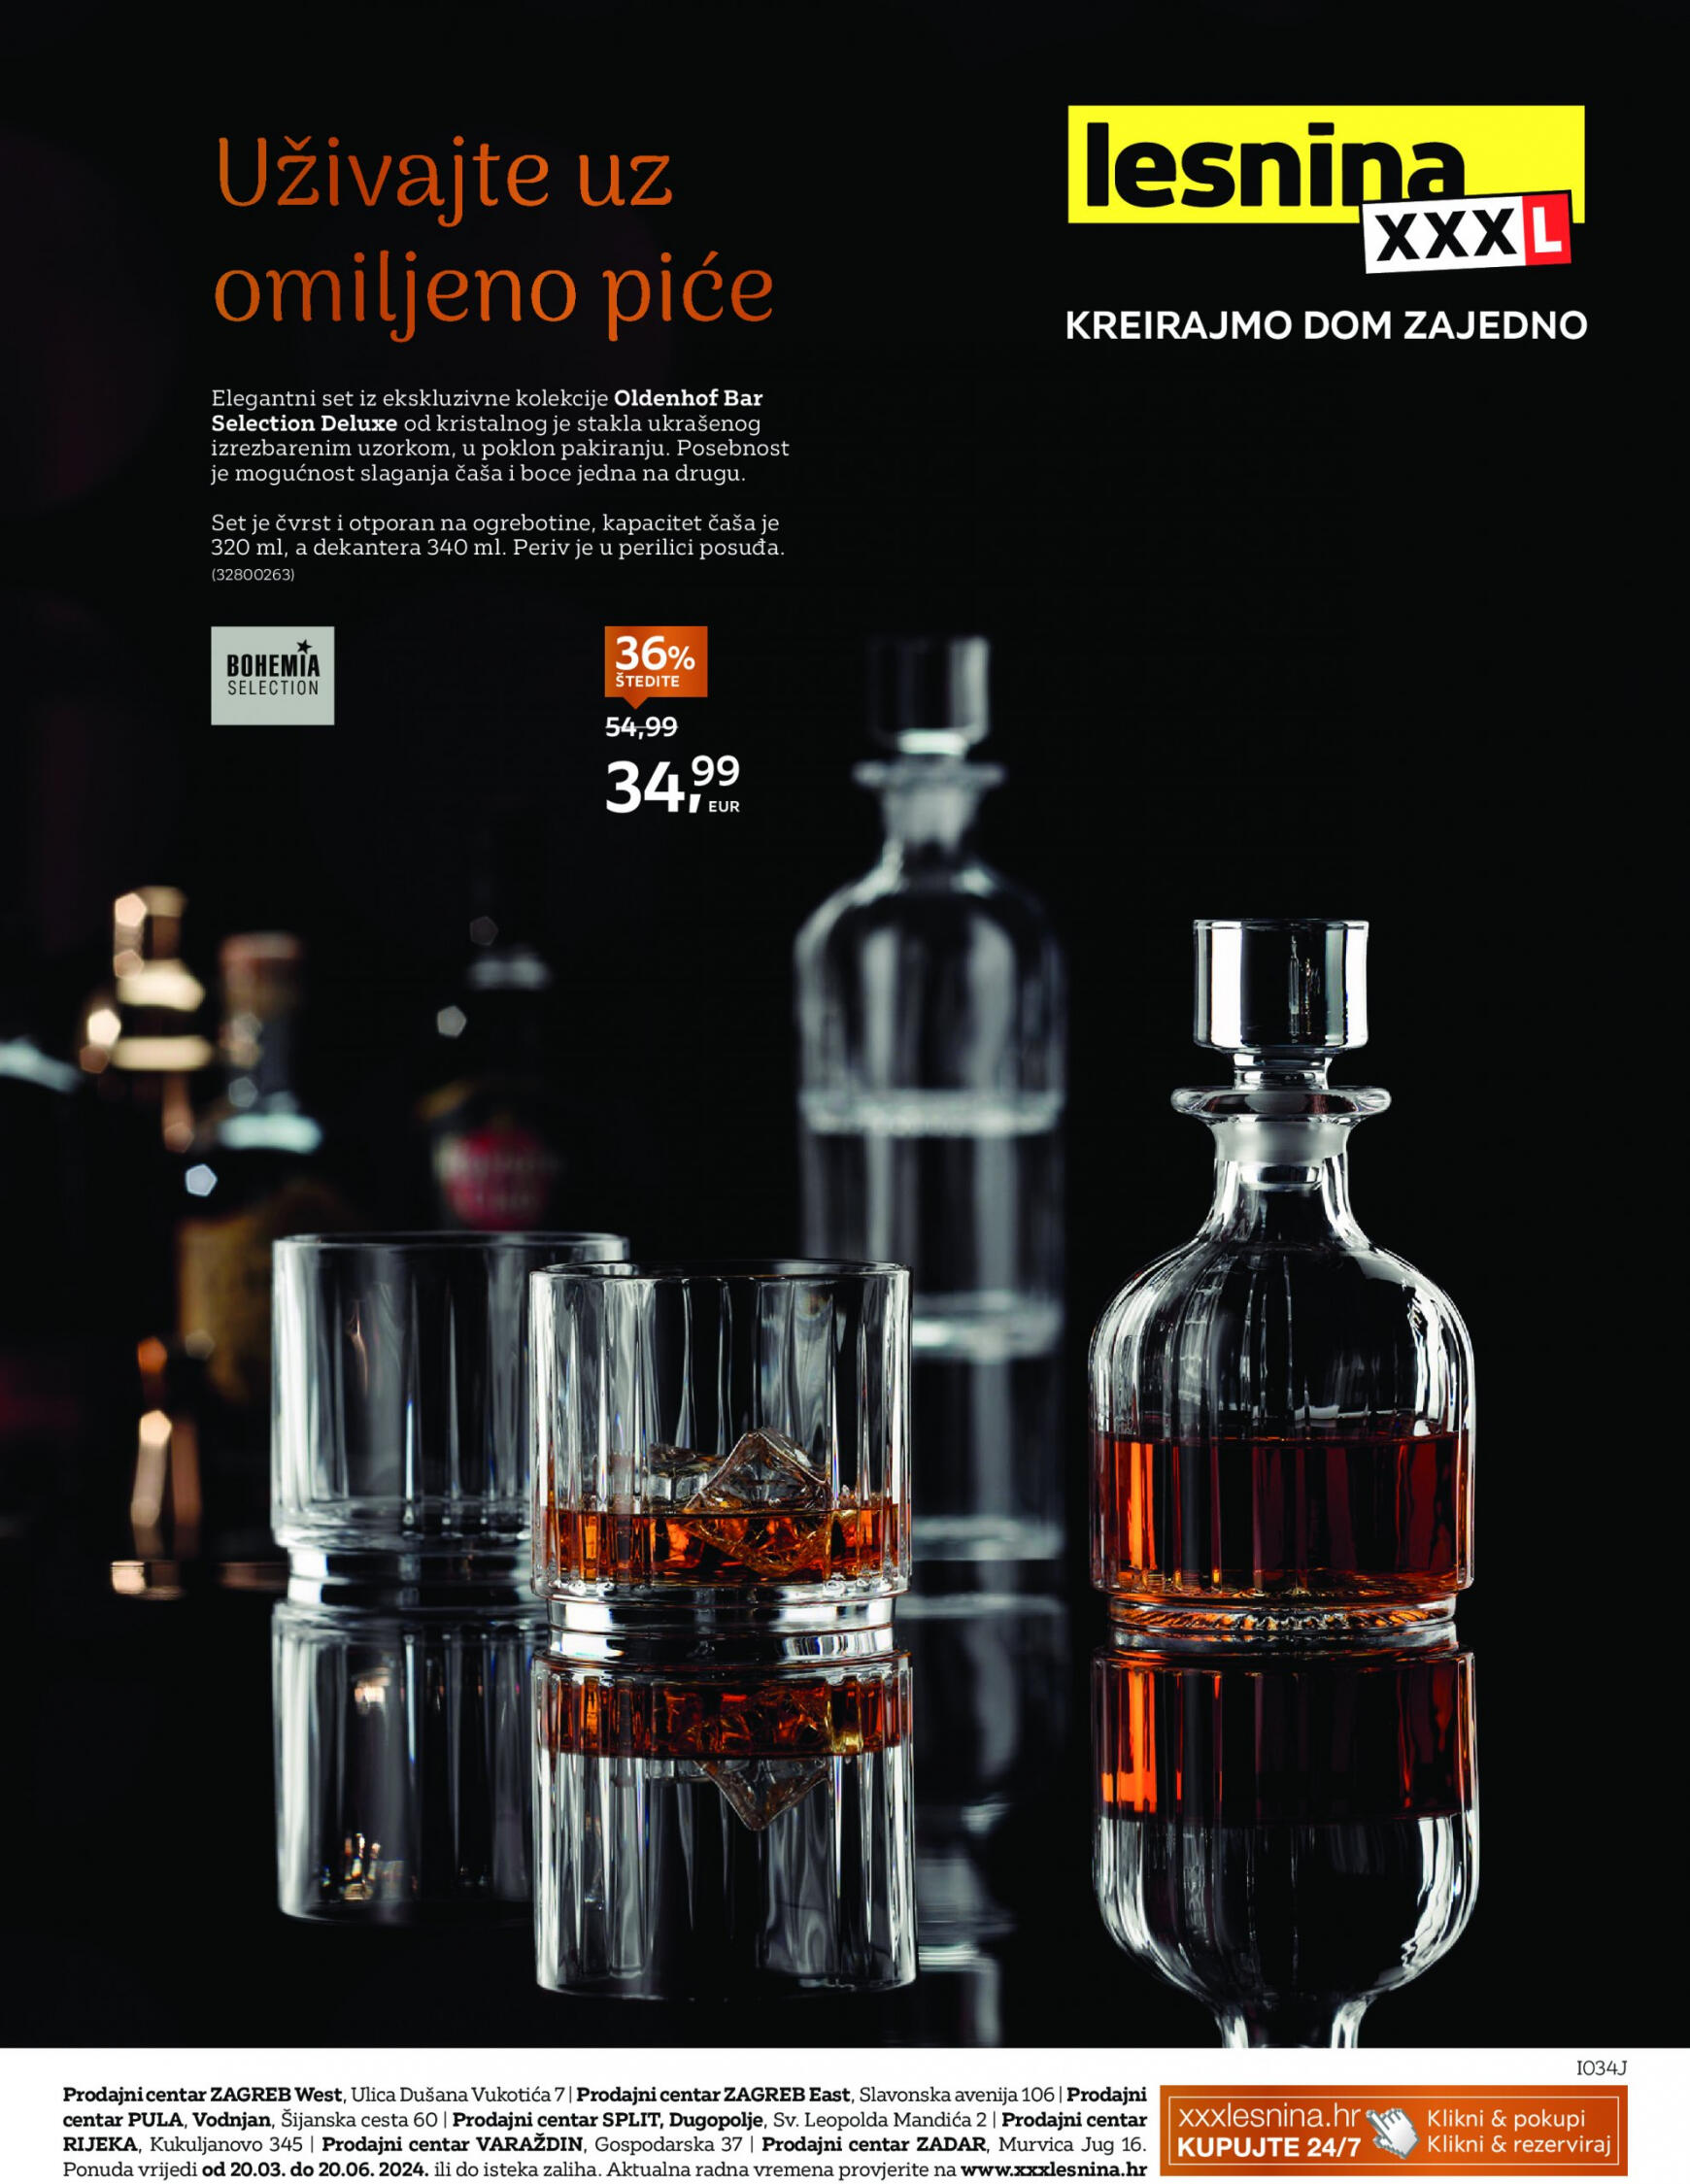 lesnina-xxxl - Novi katalog Lesnina - Uživajte uz omiljeno piće 20.03. - 20.06.